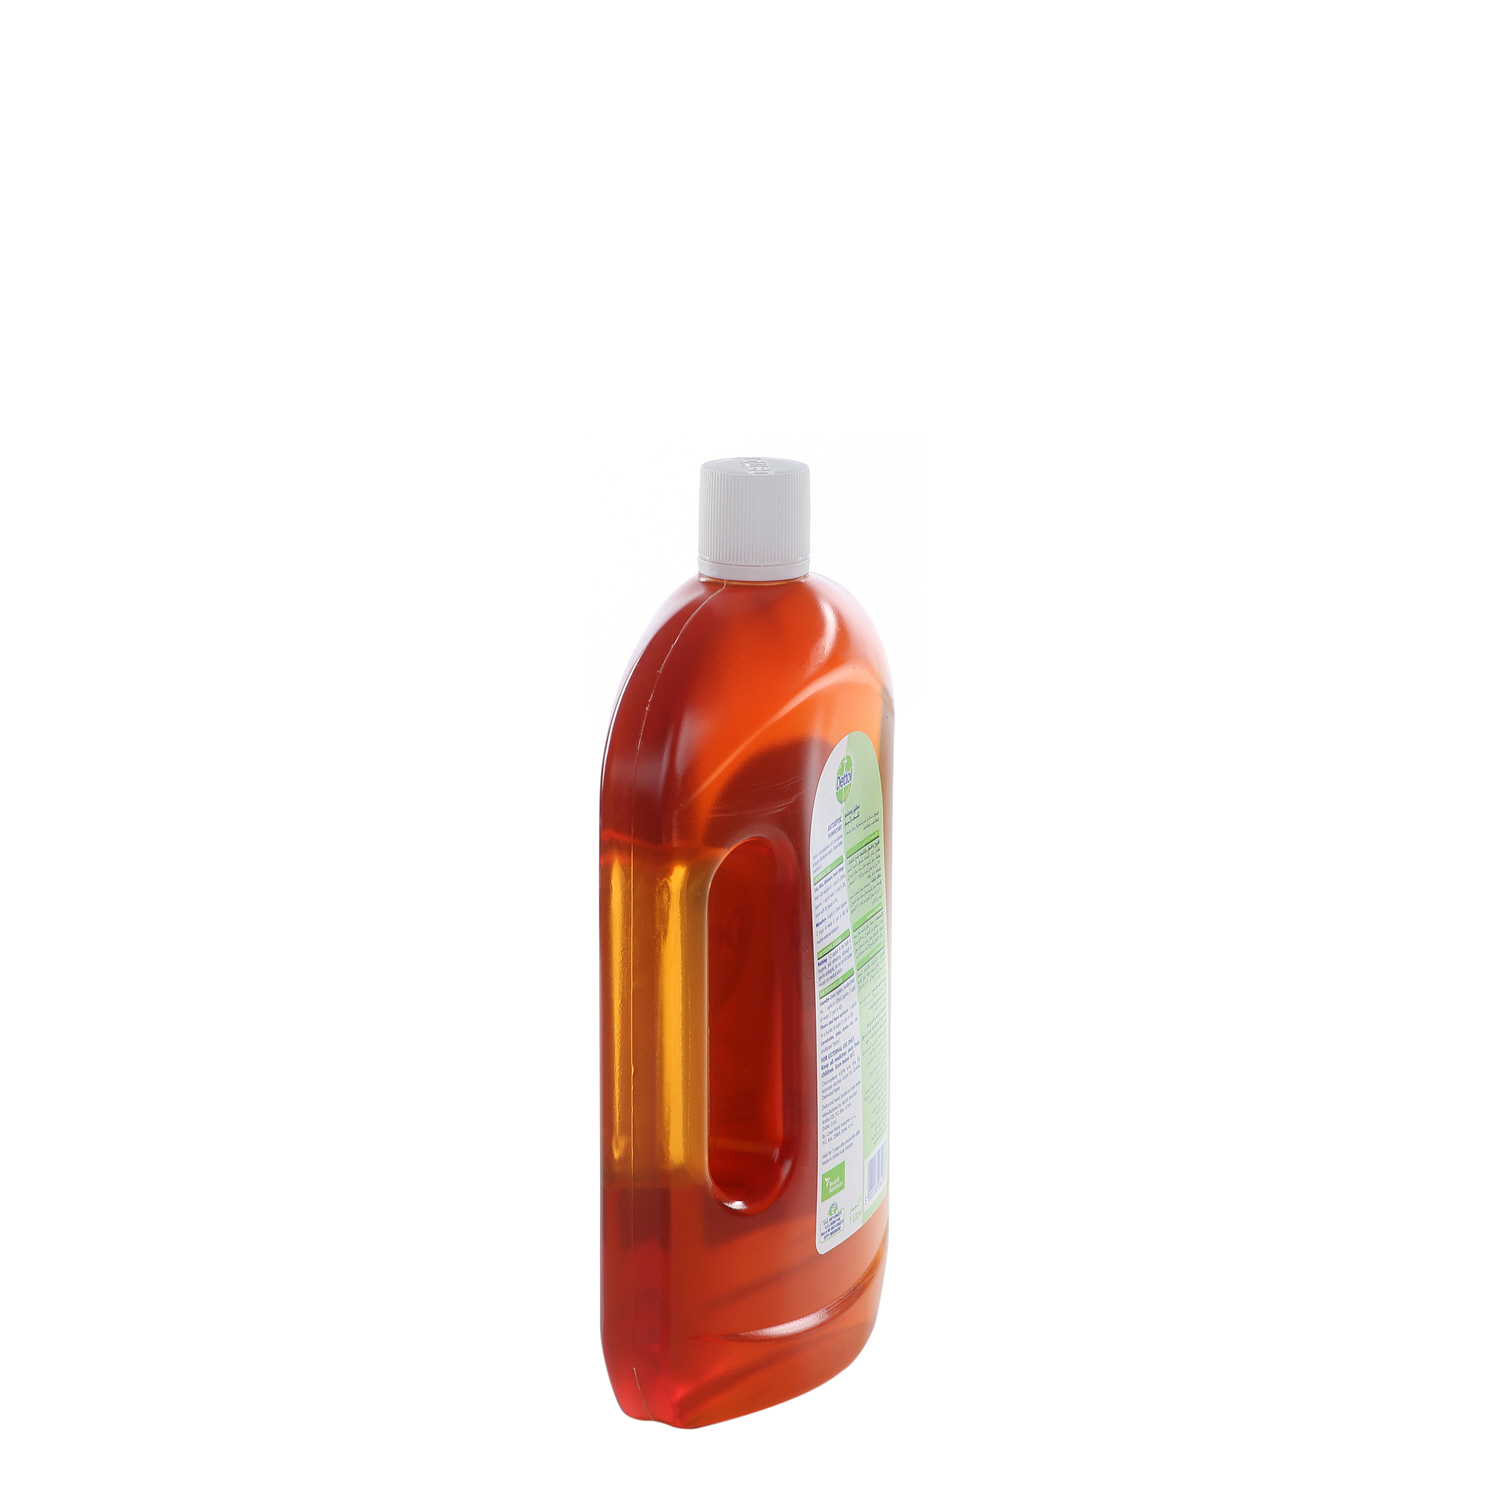 Dettol Anti-Bacterial Disinfectant Liquid 1 L